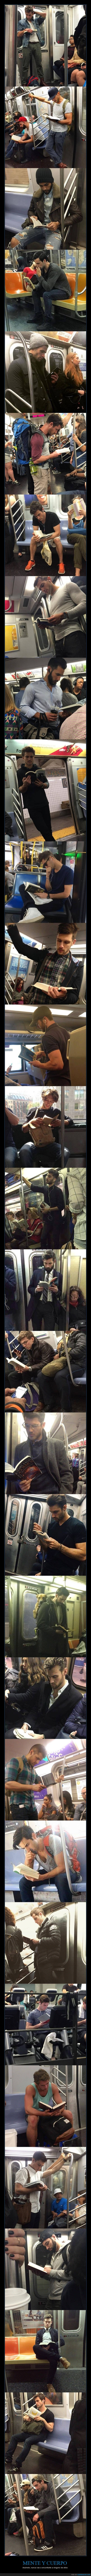 tíos buenos,metro,subway,intelecto,leer,libros